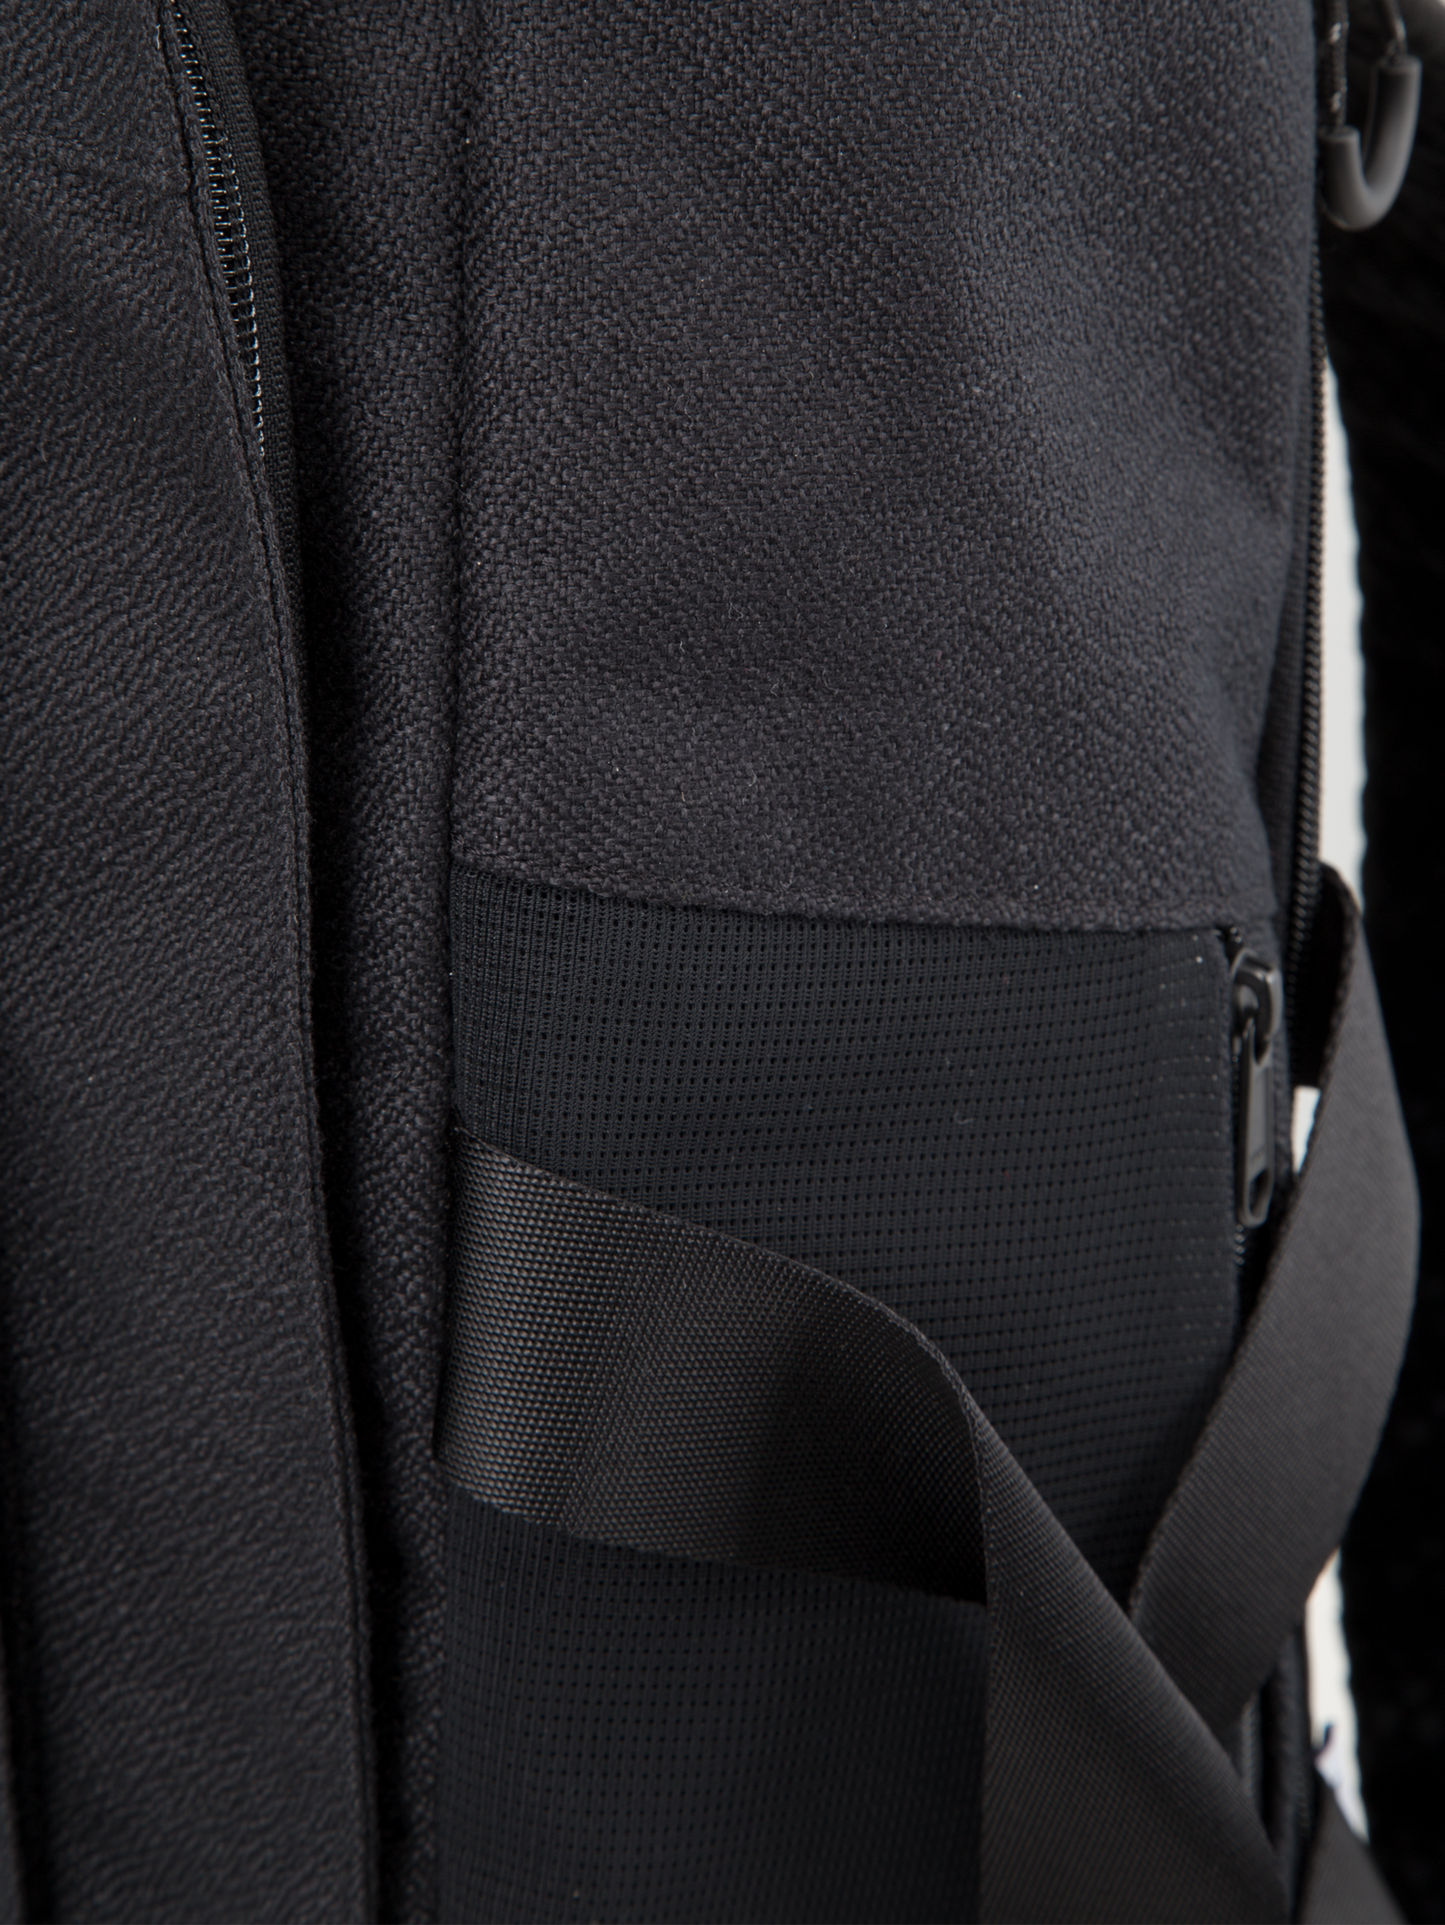 pinqponq-backpack-Blok-Large-Licorice-Black-detail